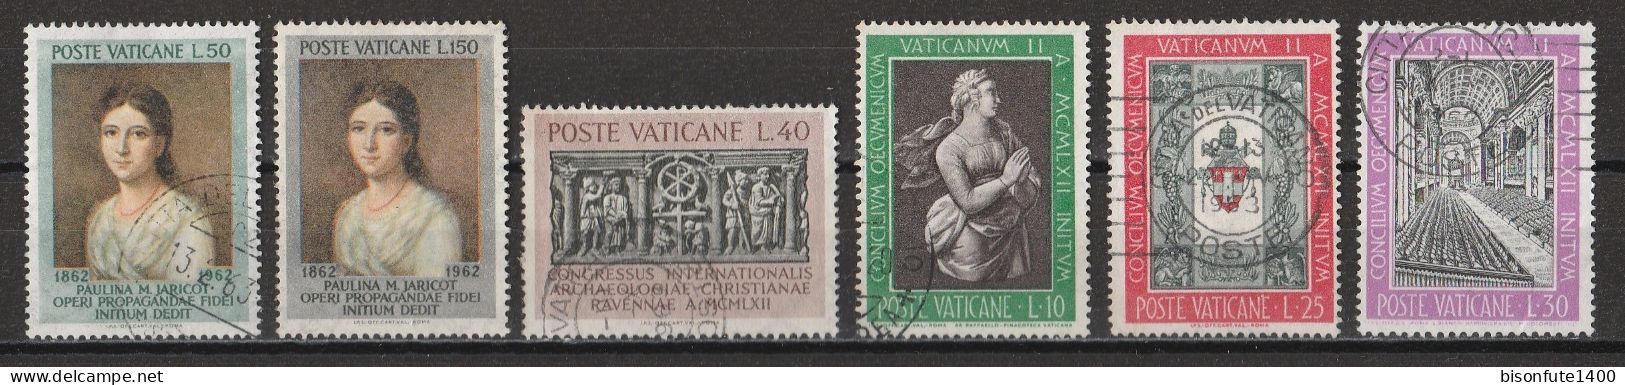 Vatican 1962 : Timbres Yvert & Tellier N° 357 - 358 - 360 - 364 - 366 - 367 - 368 - 369 - 370 - 371 Et 372 Oblitérés. - Gebraucht